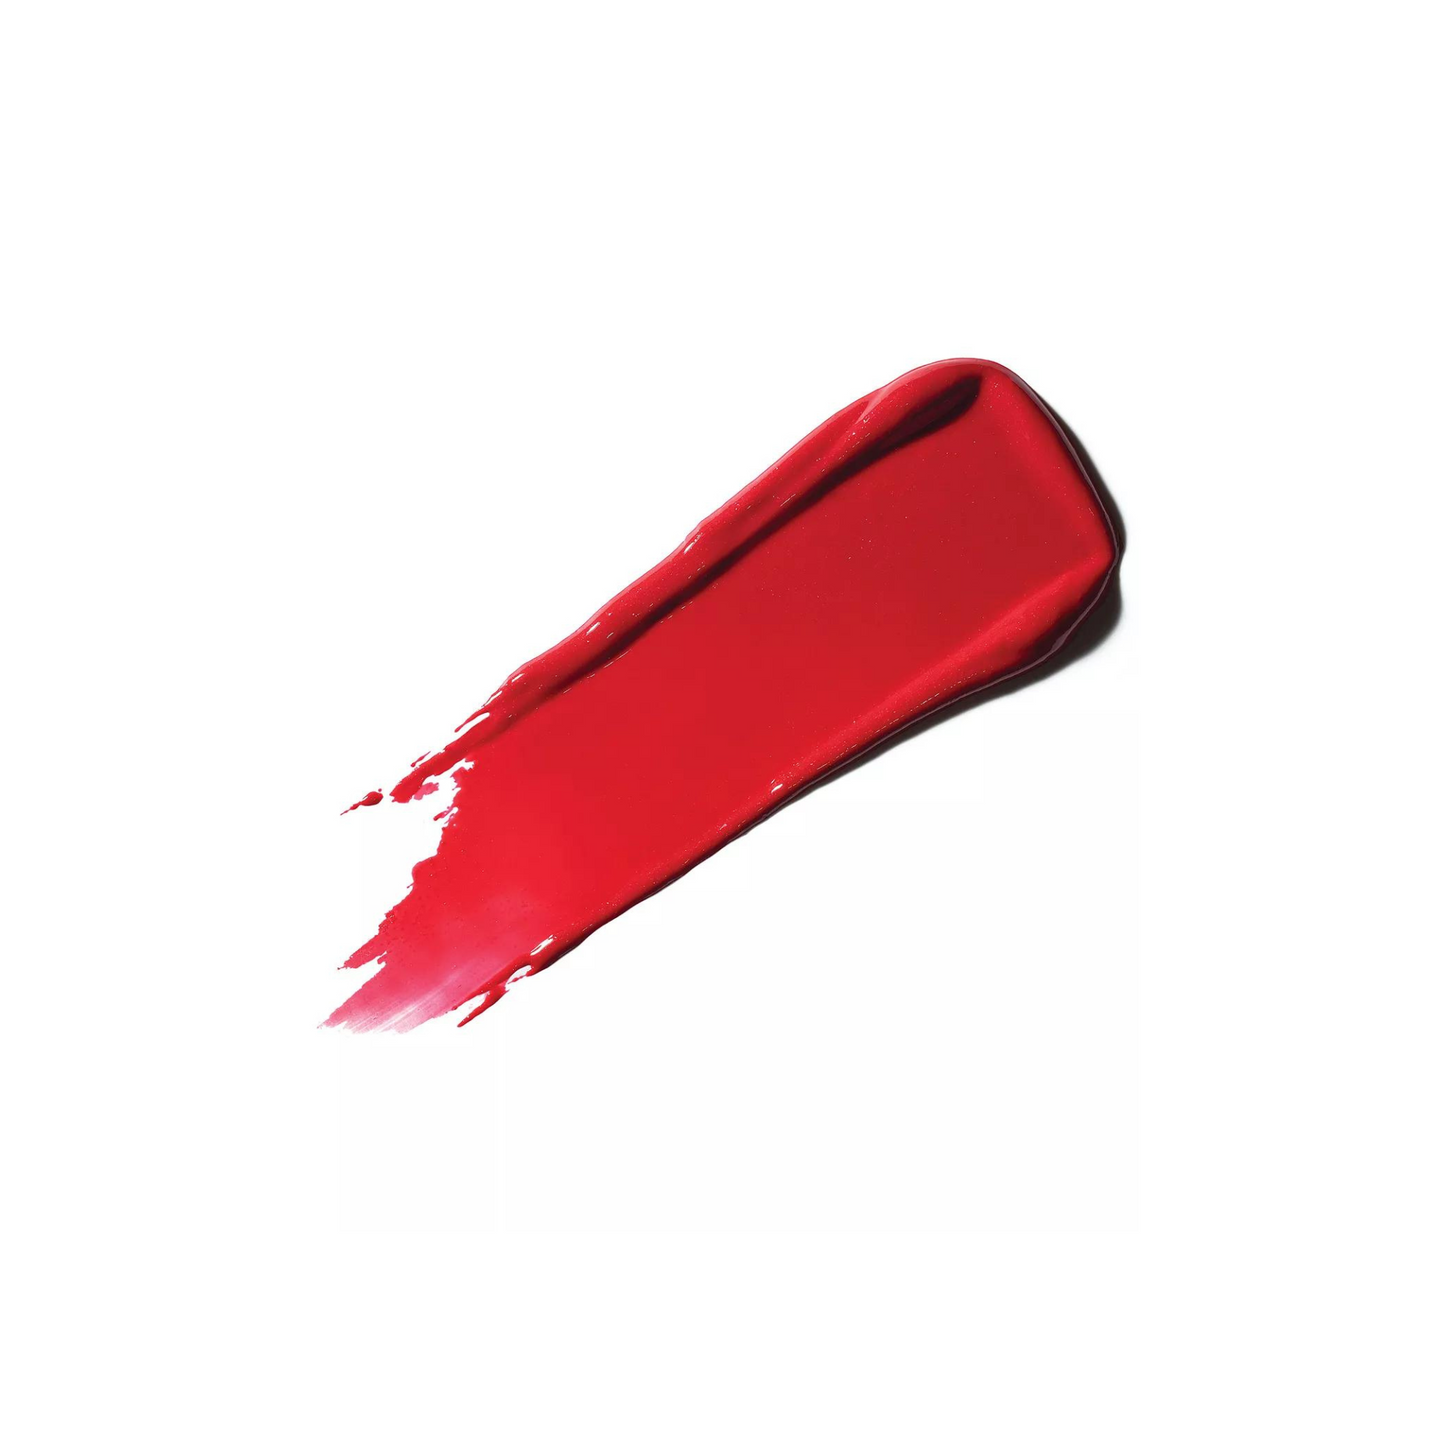 MAC - Lustre Lipstick - 502 Cockney